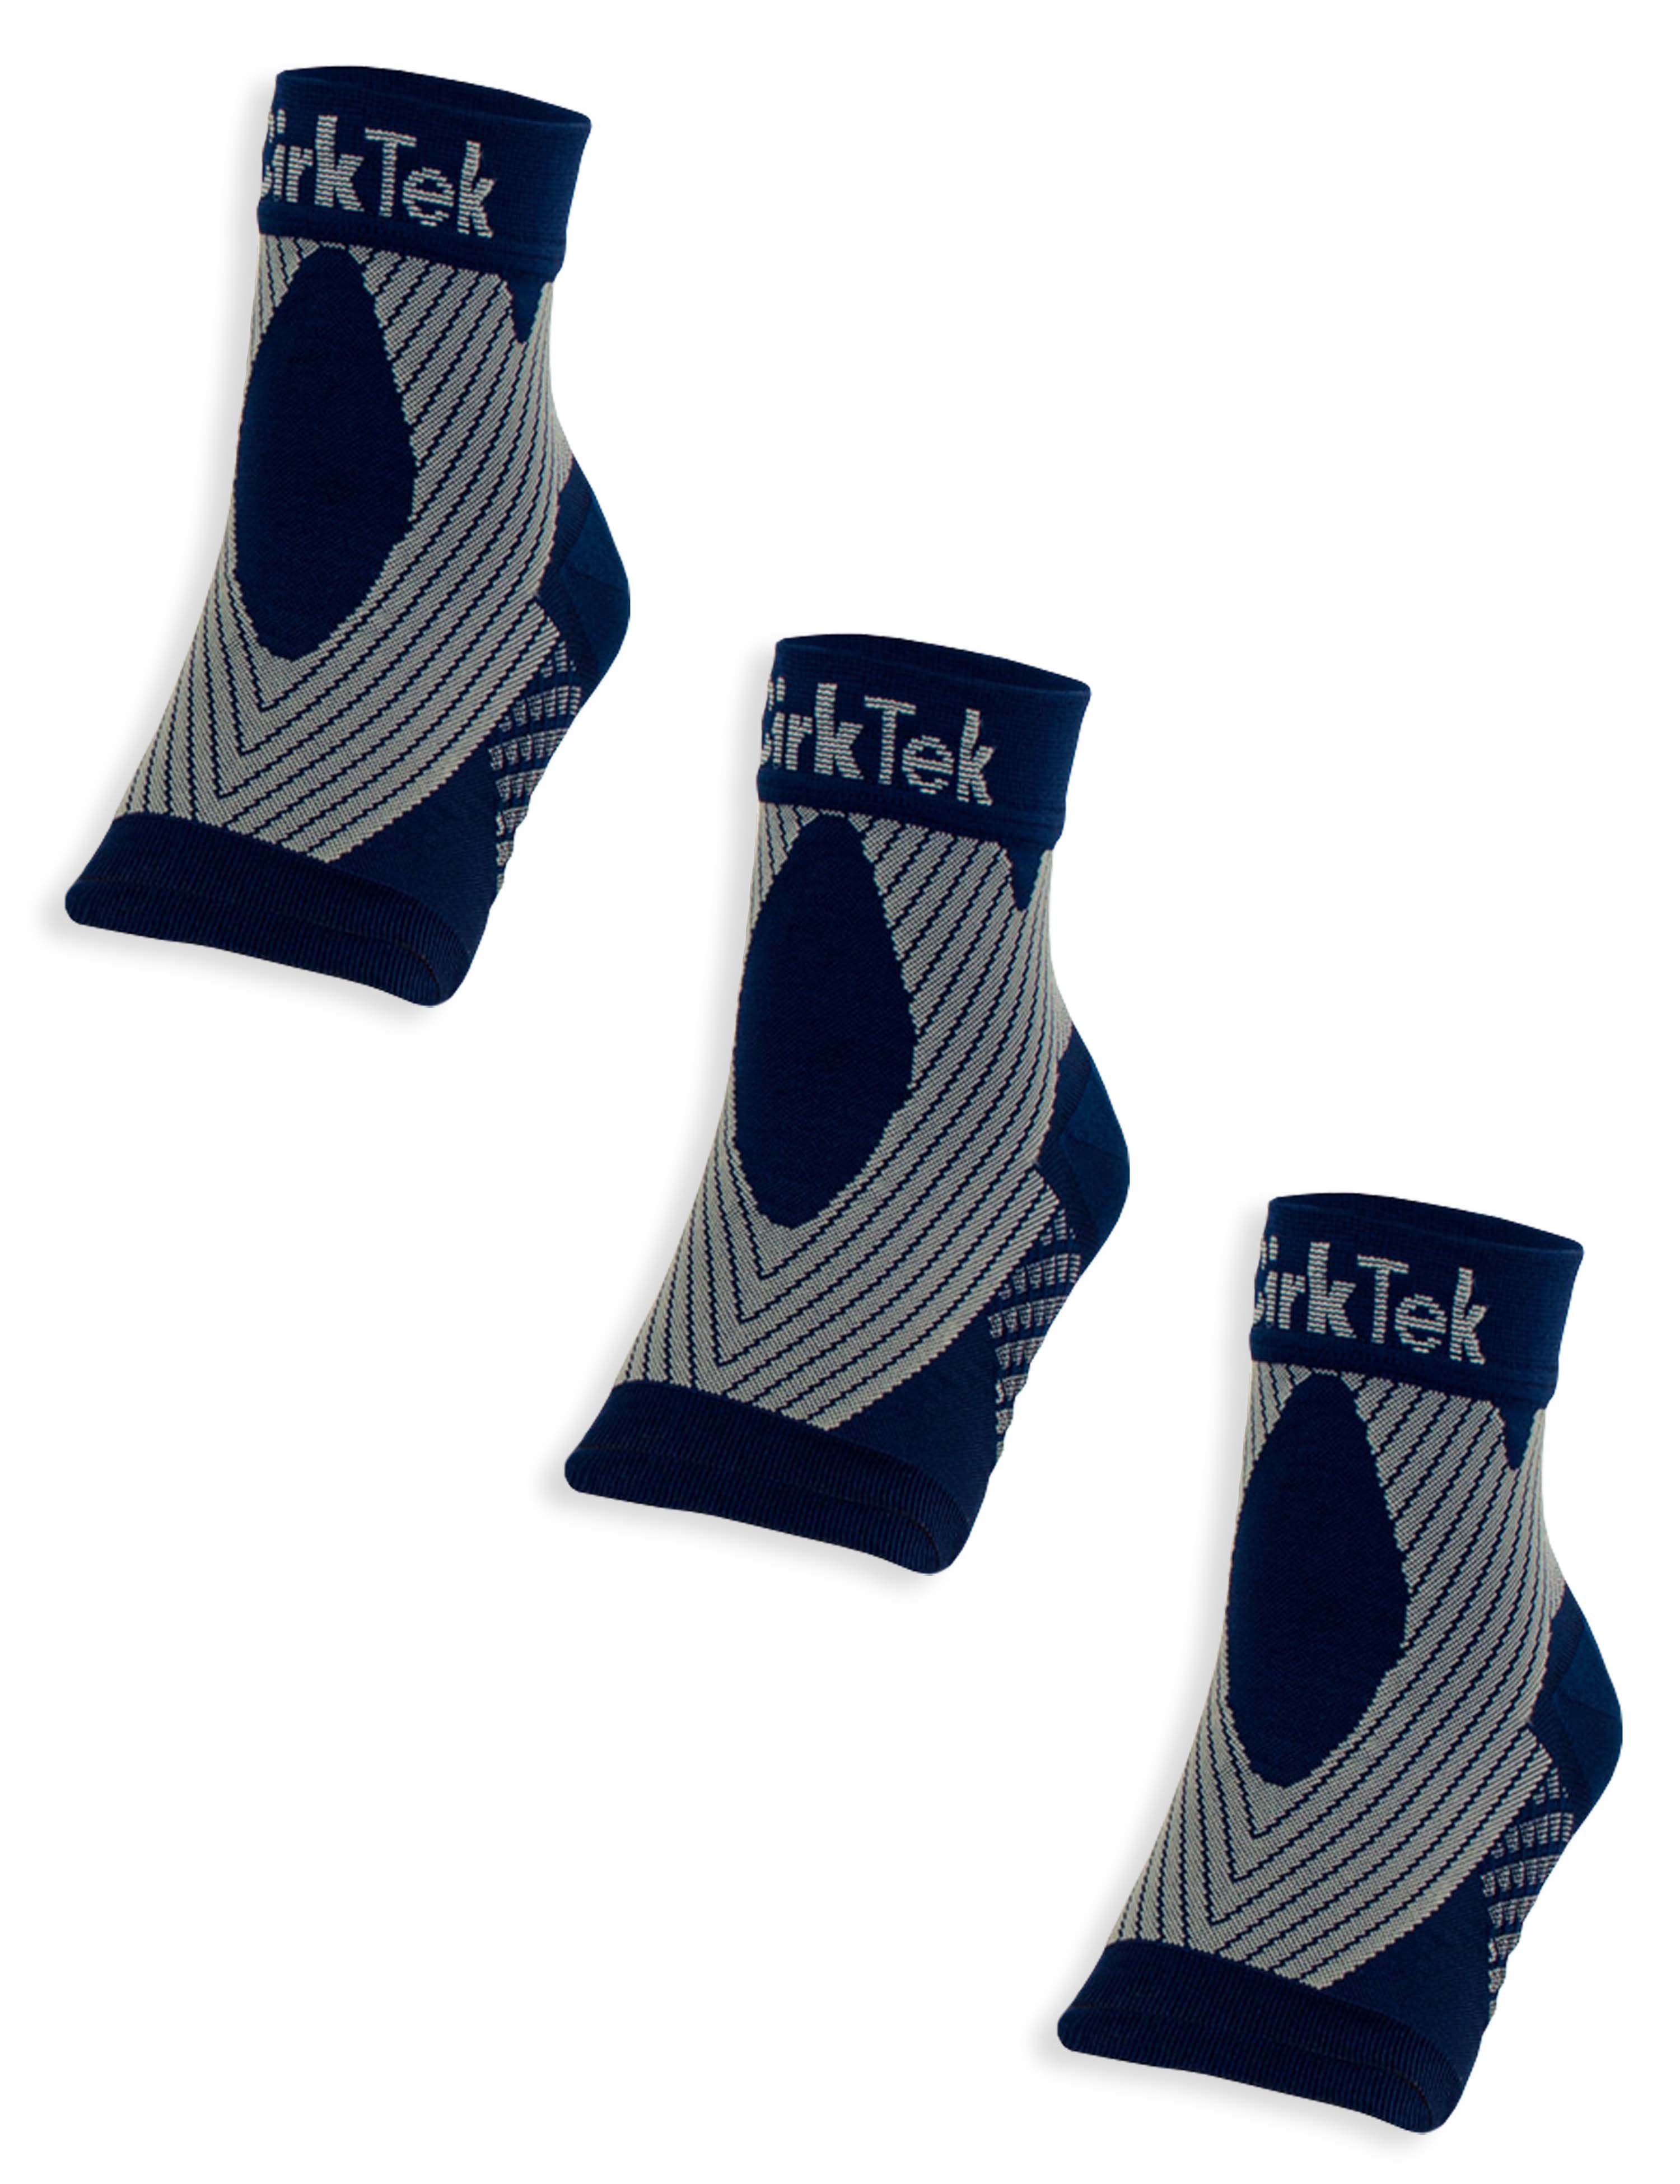 Ankle Sleeve 20-30 mmHg 3PACK - Navy Blue